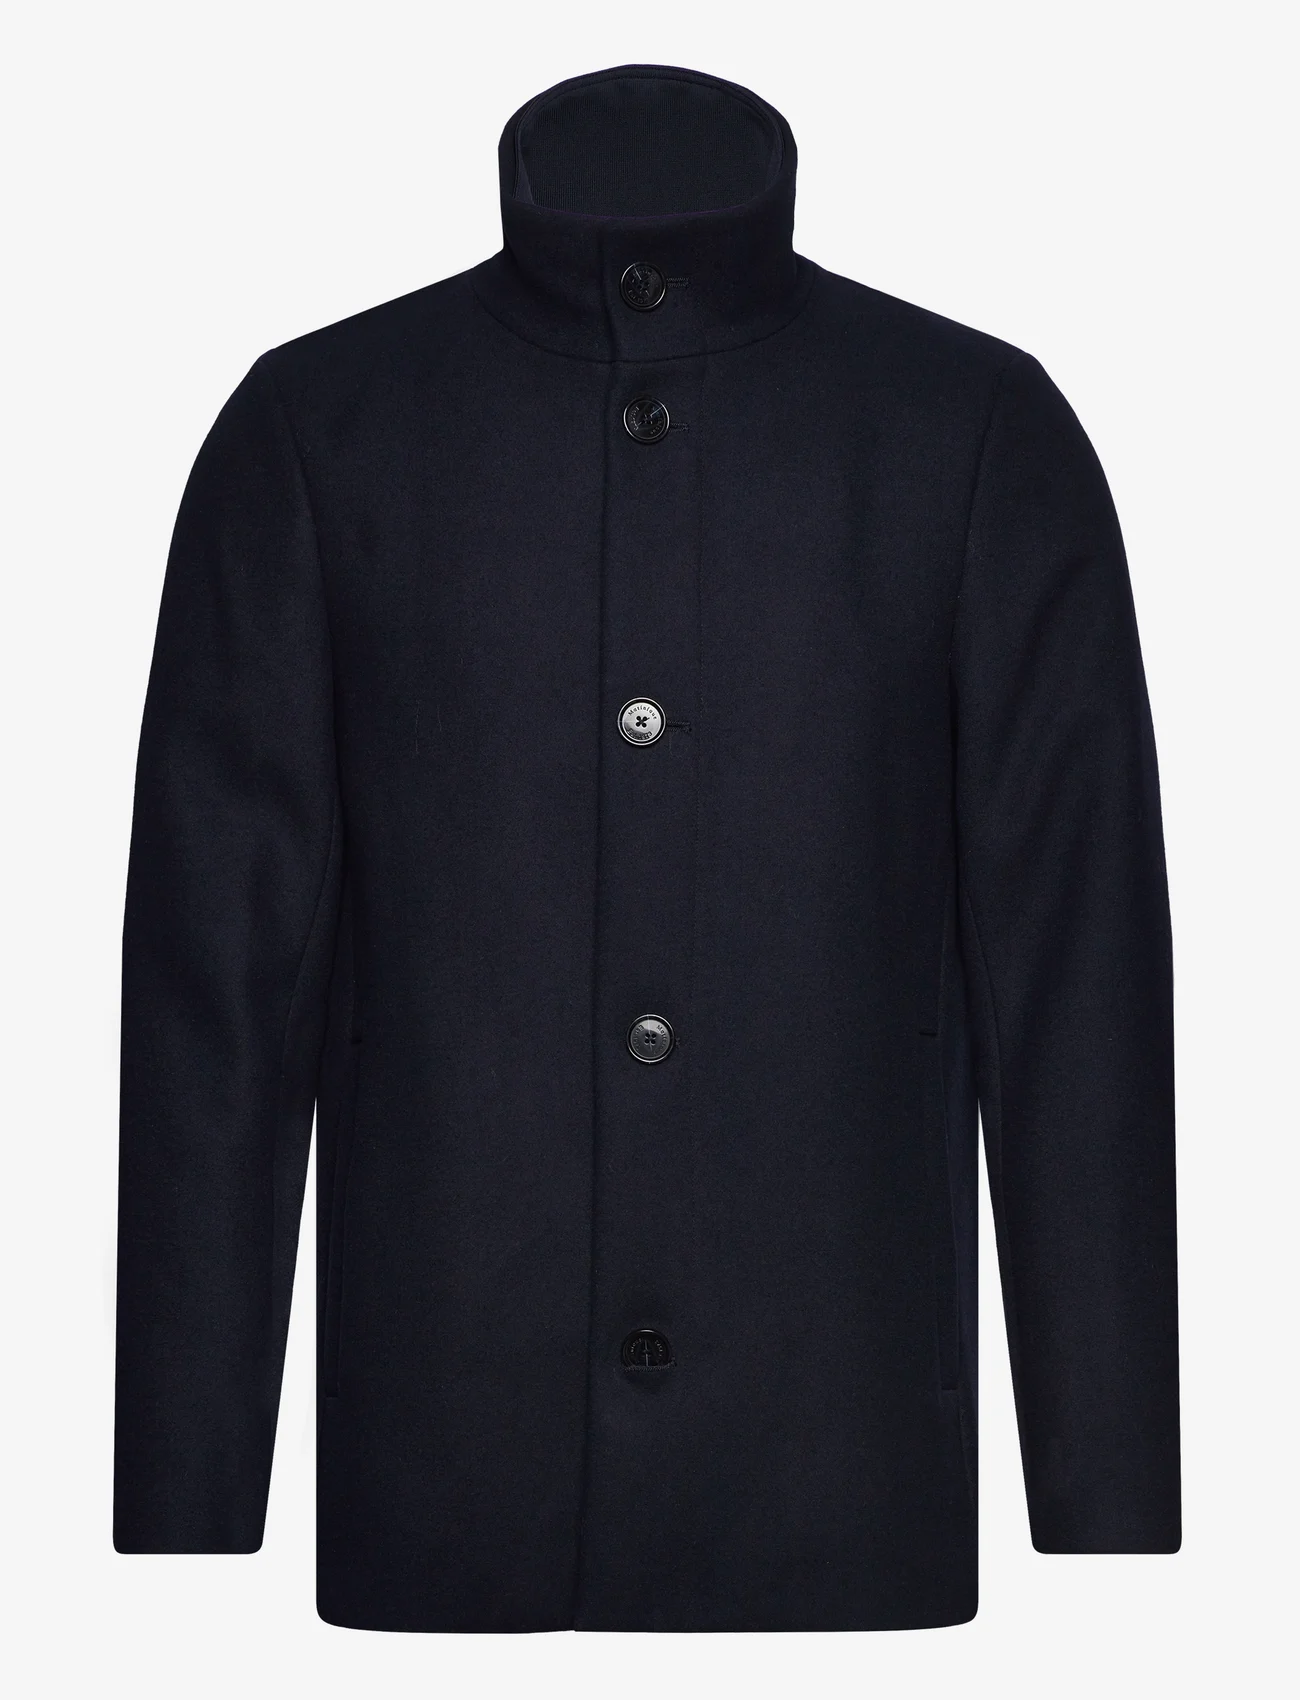 Matinique - MARobert Short - wool jackets - dark navy - 0